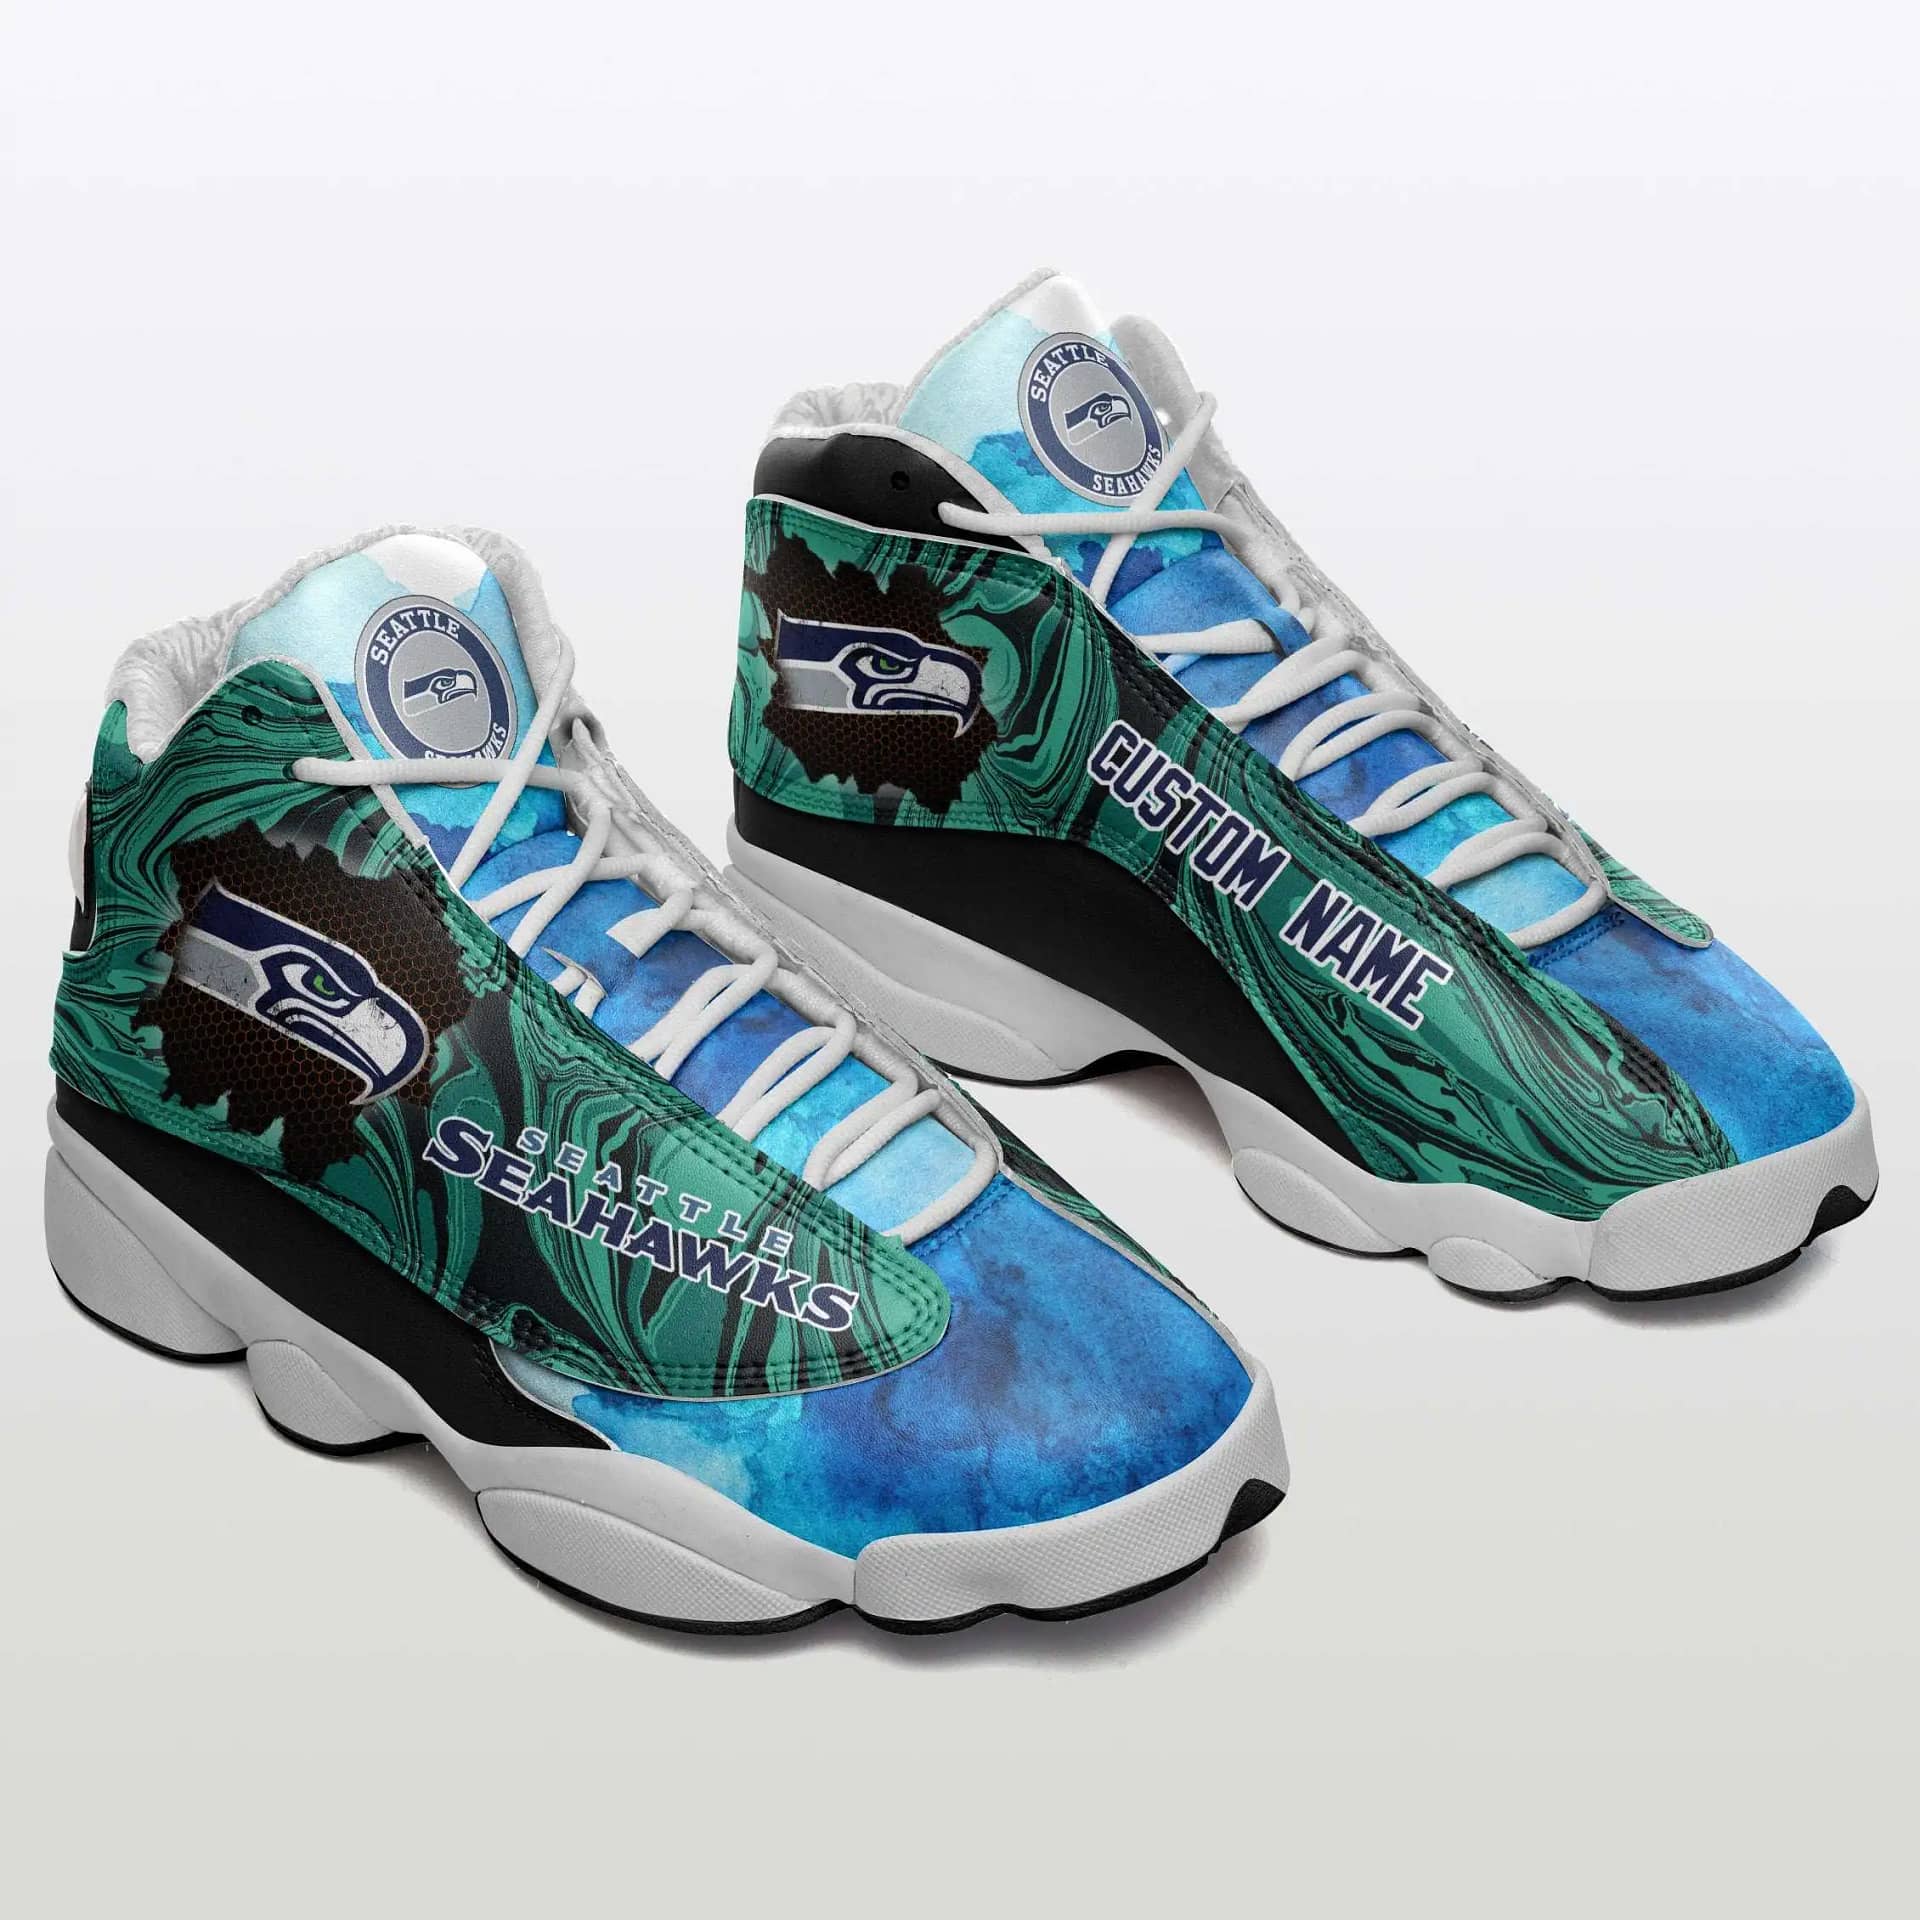 Seattle Seahawks Air Jordan Shoes